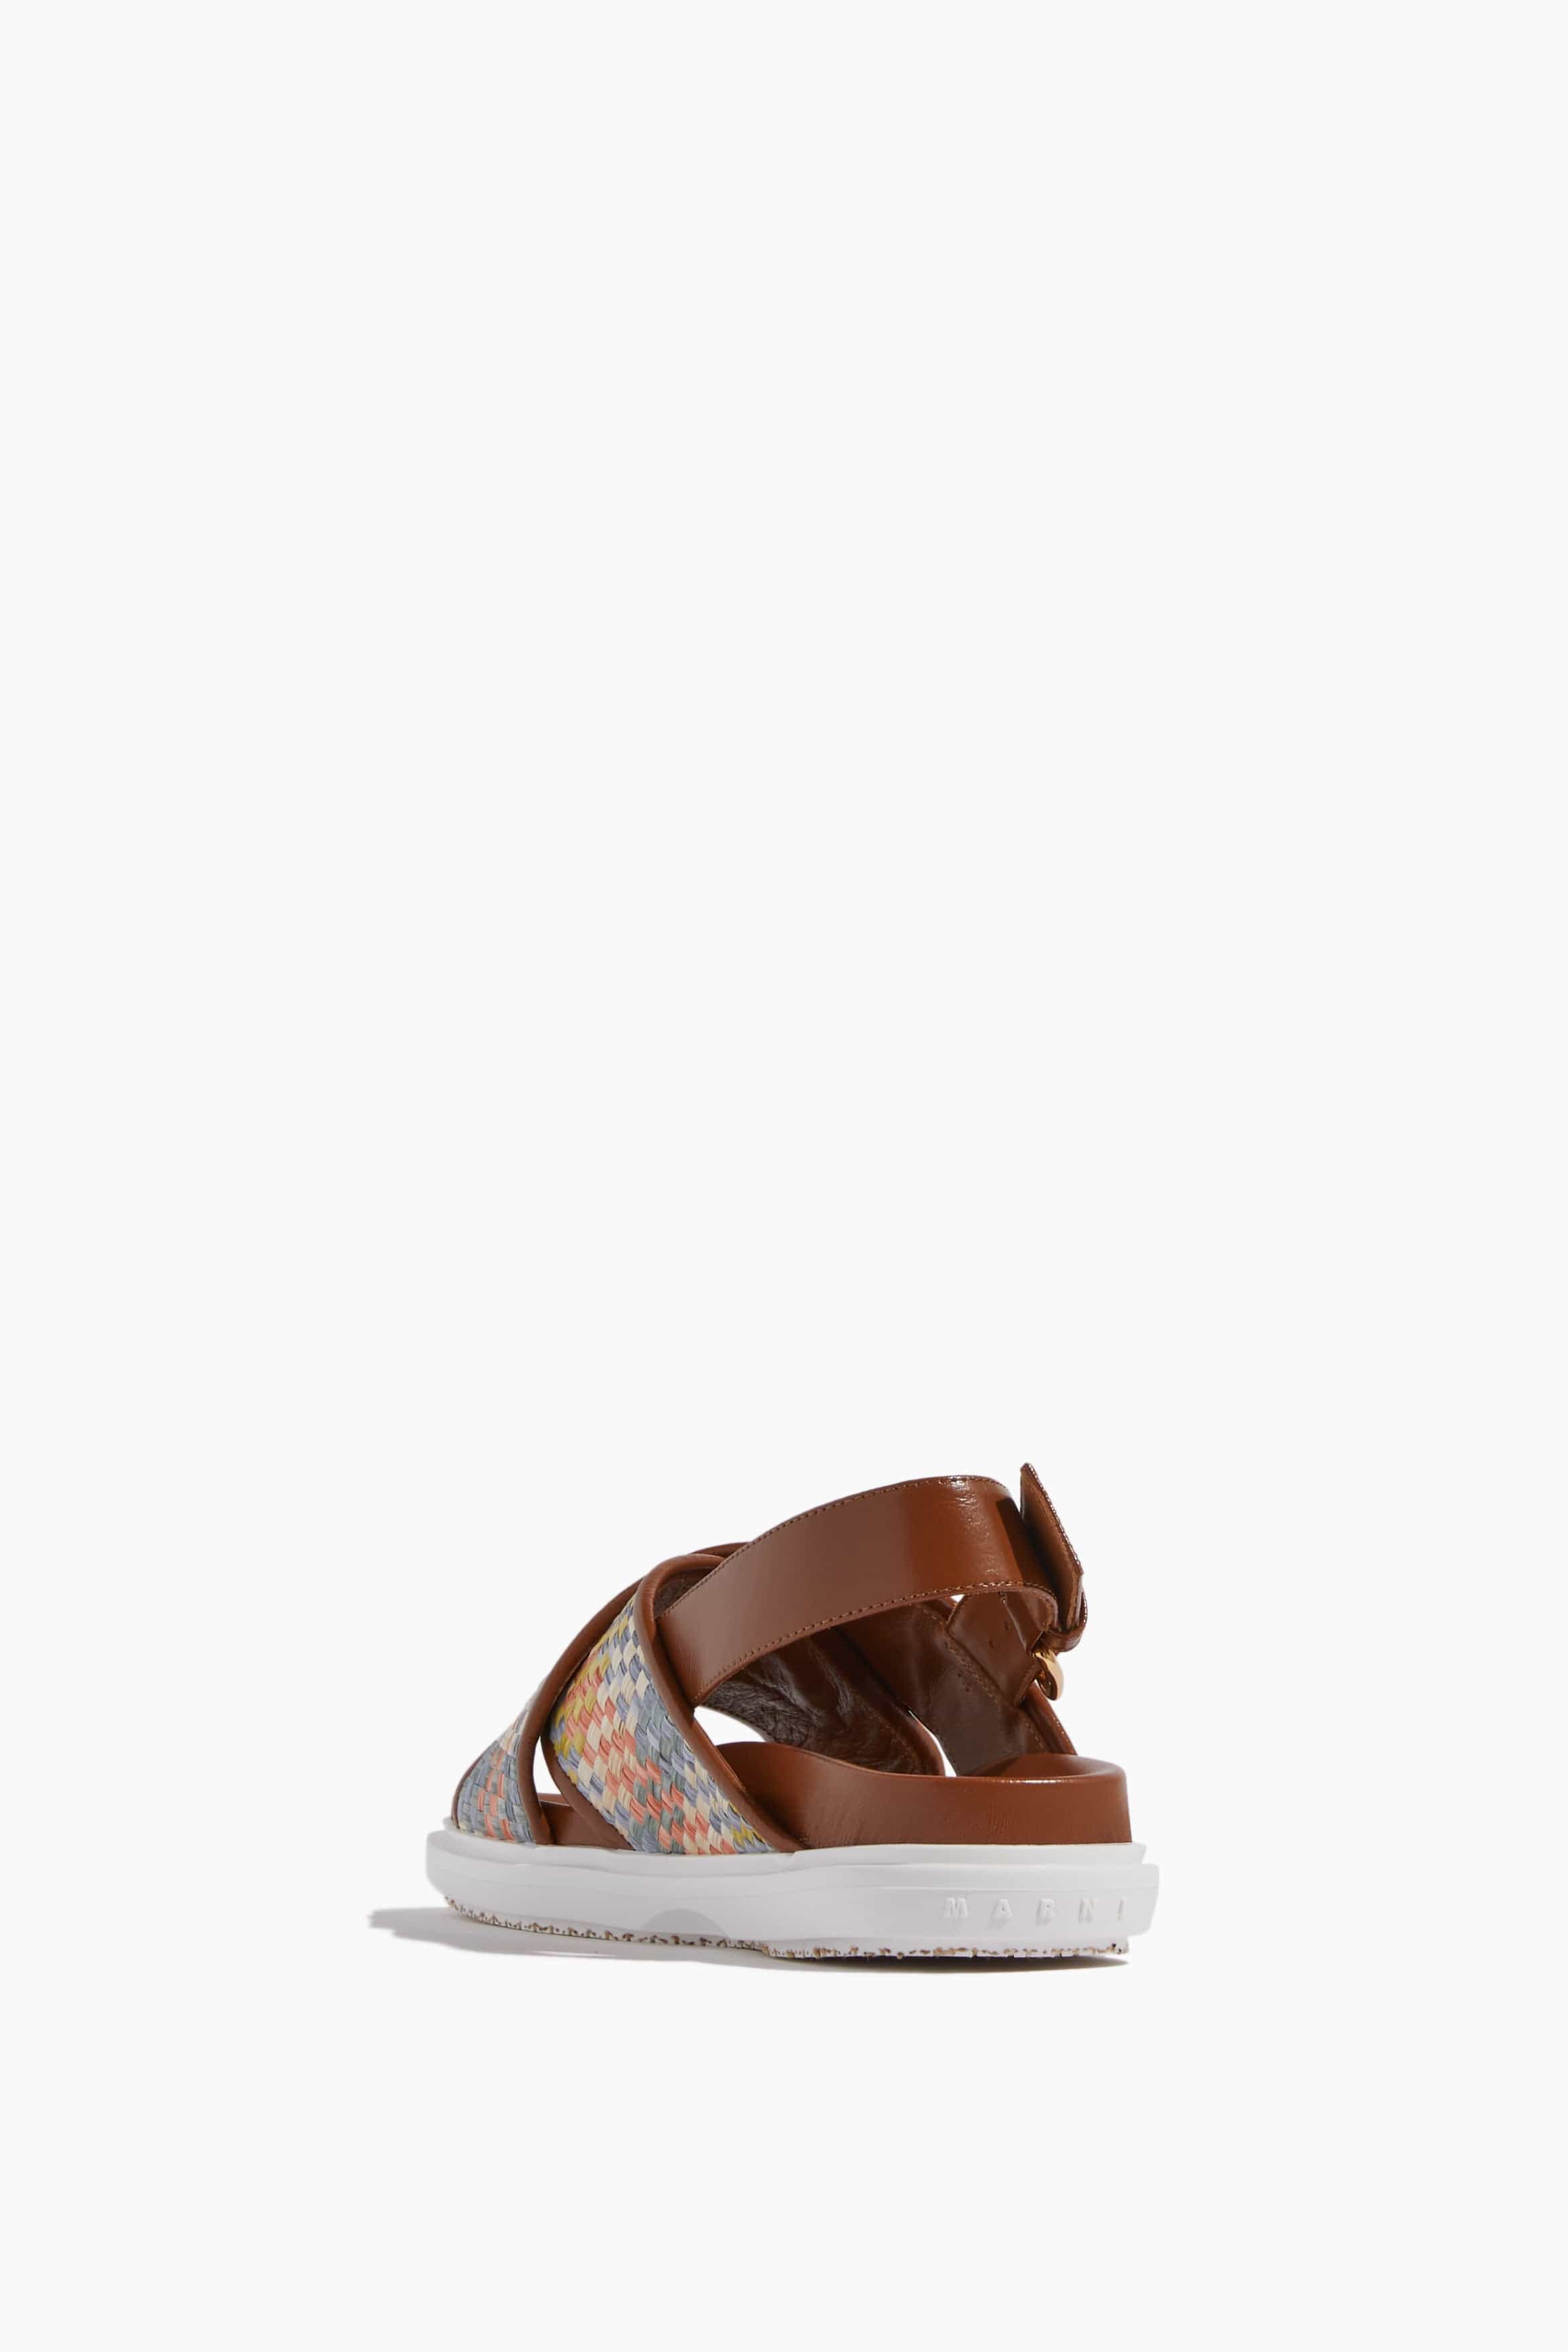 Marni Strappy Flat Sandals Fussbett Sandal in Caramel Brown/Multicolor